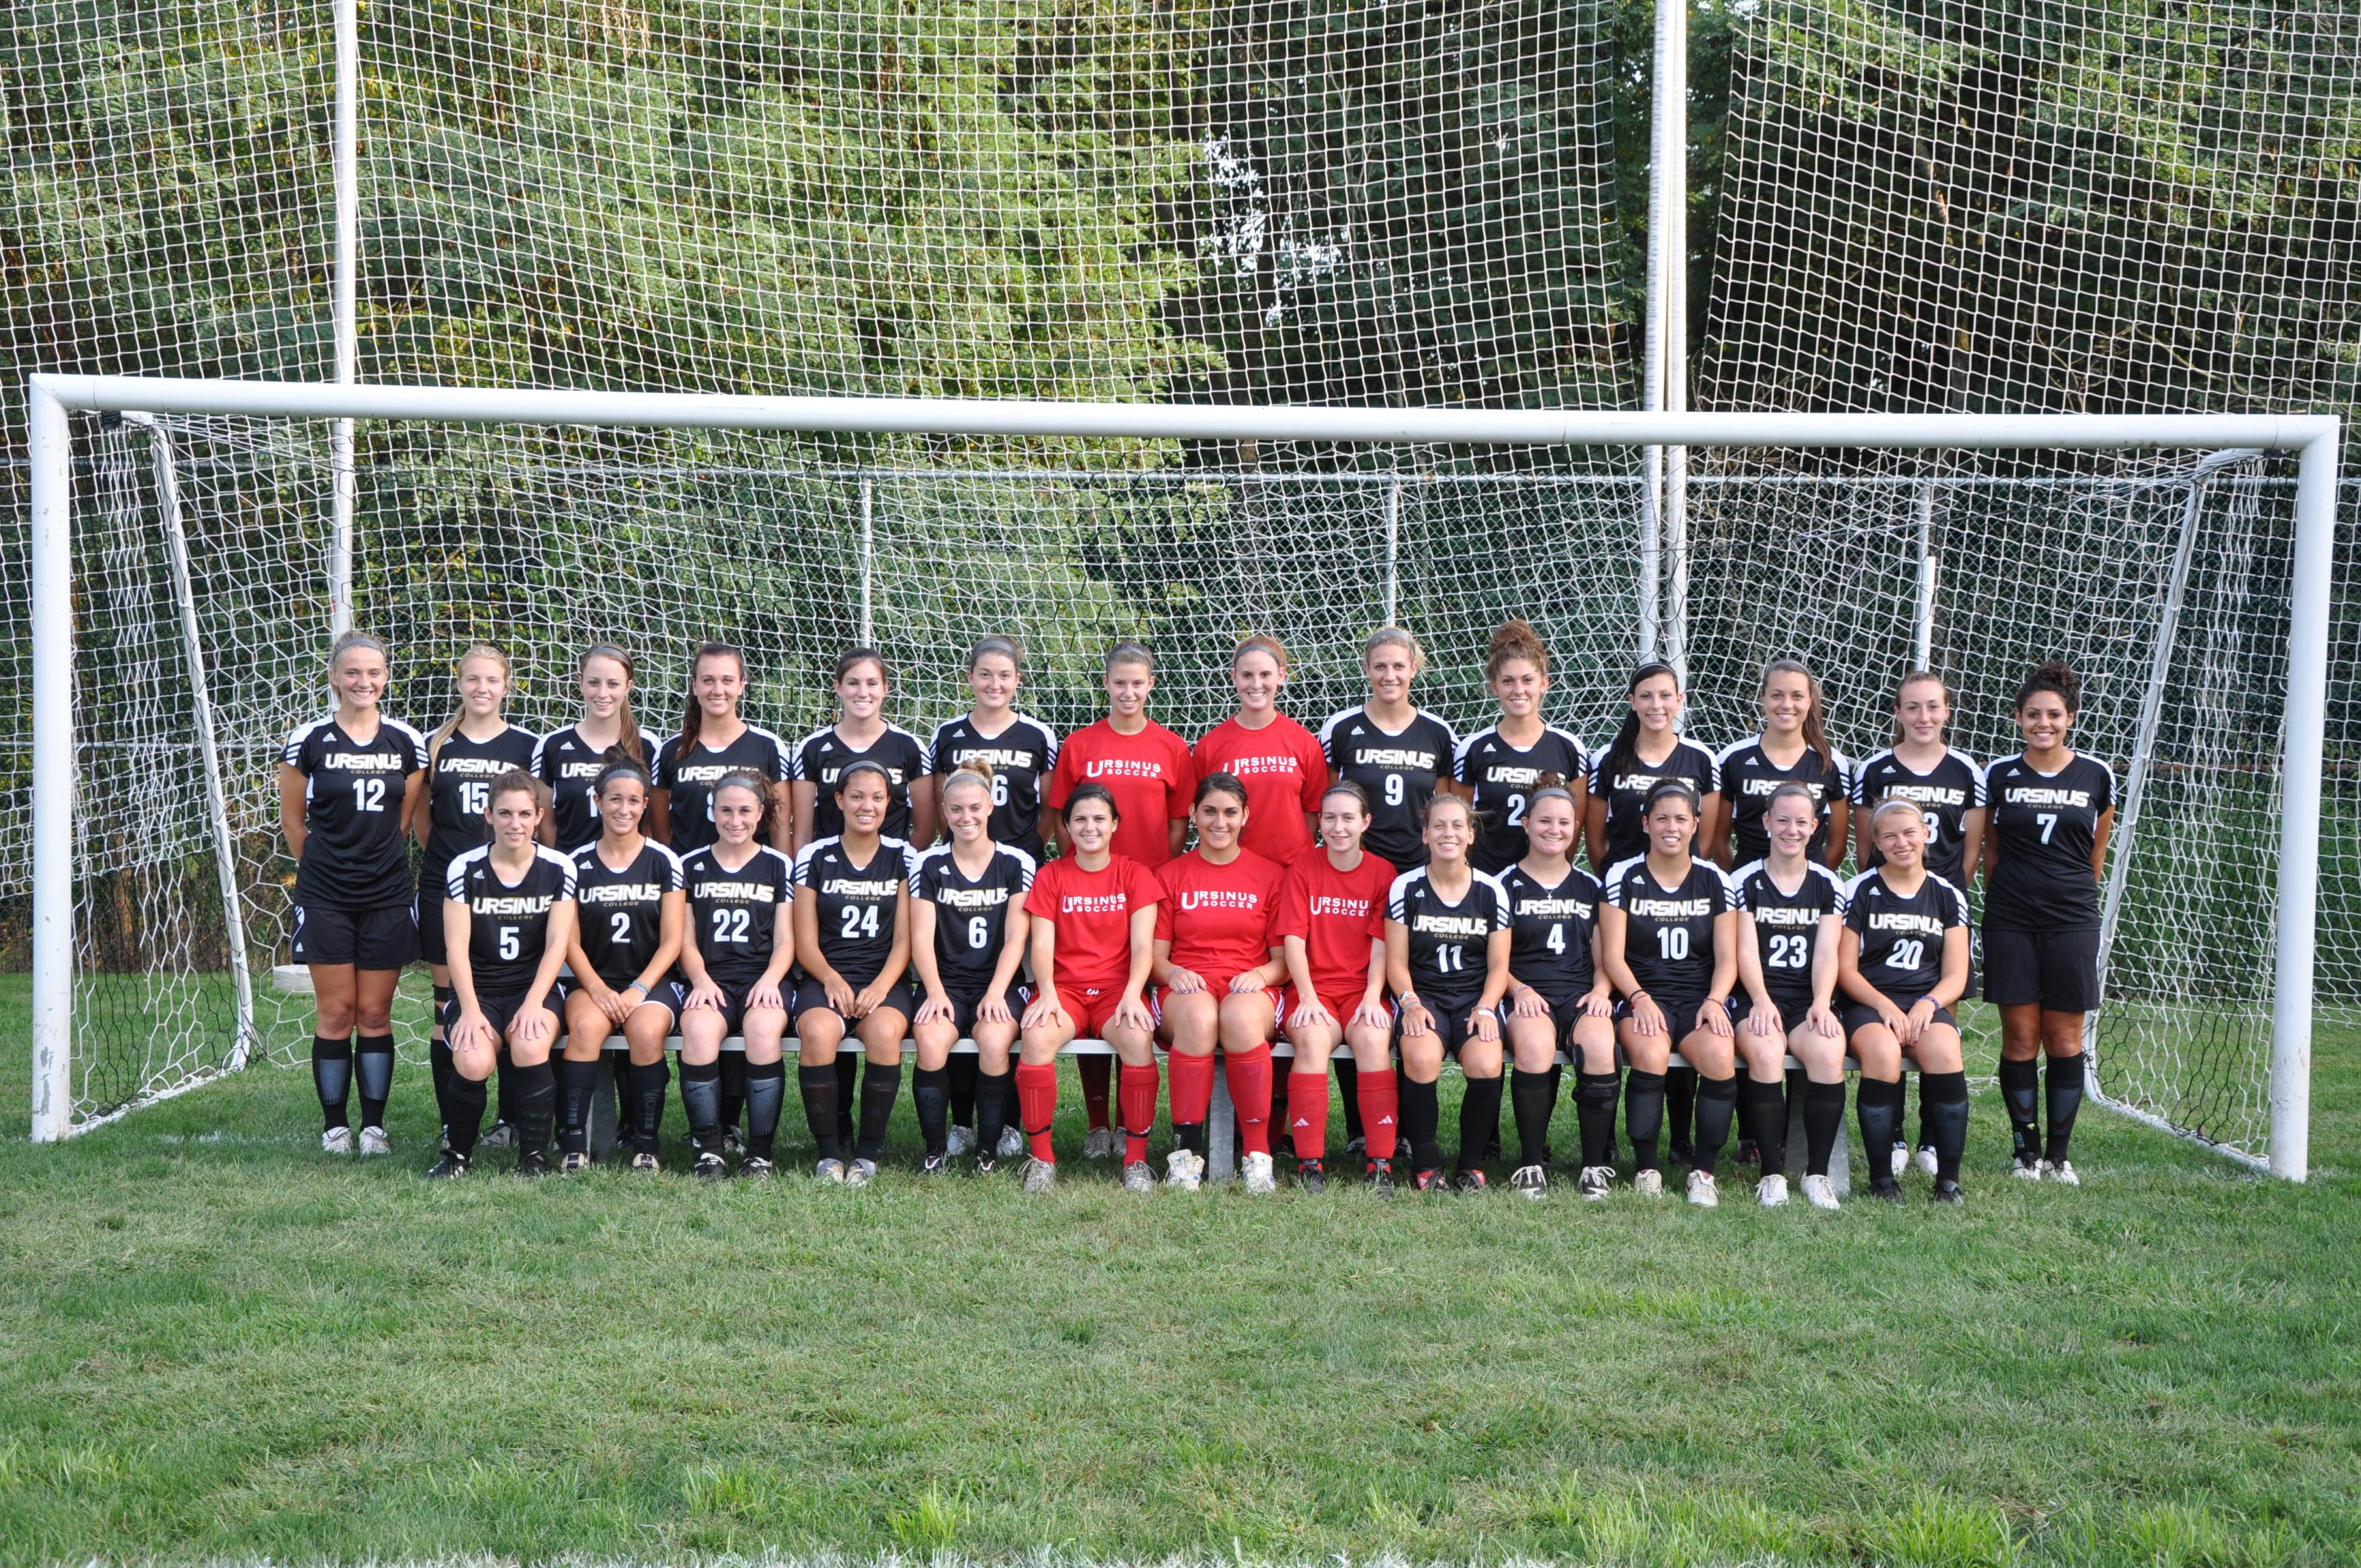 Women's Soccer blanked by Gettysburg, 1-0